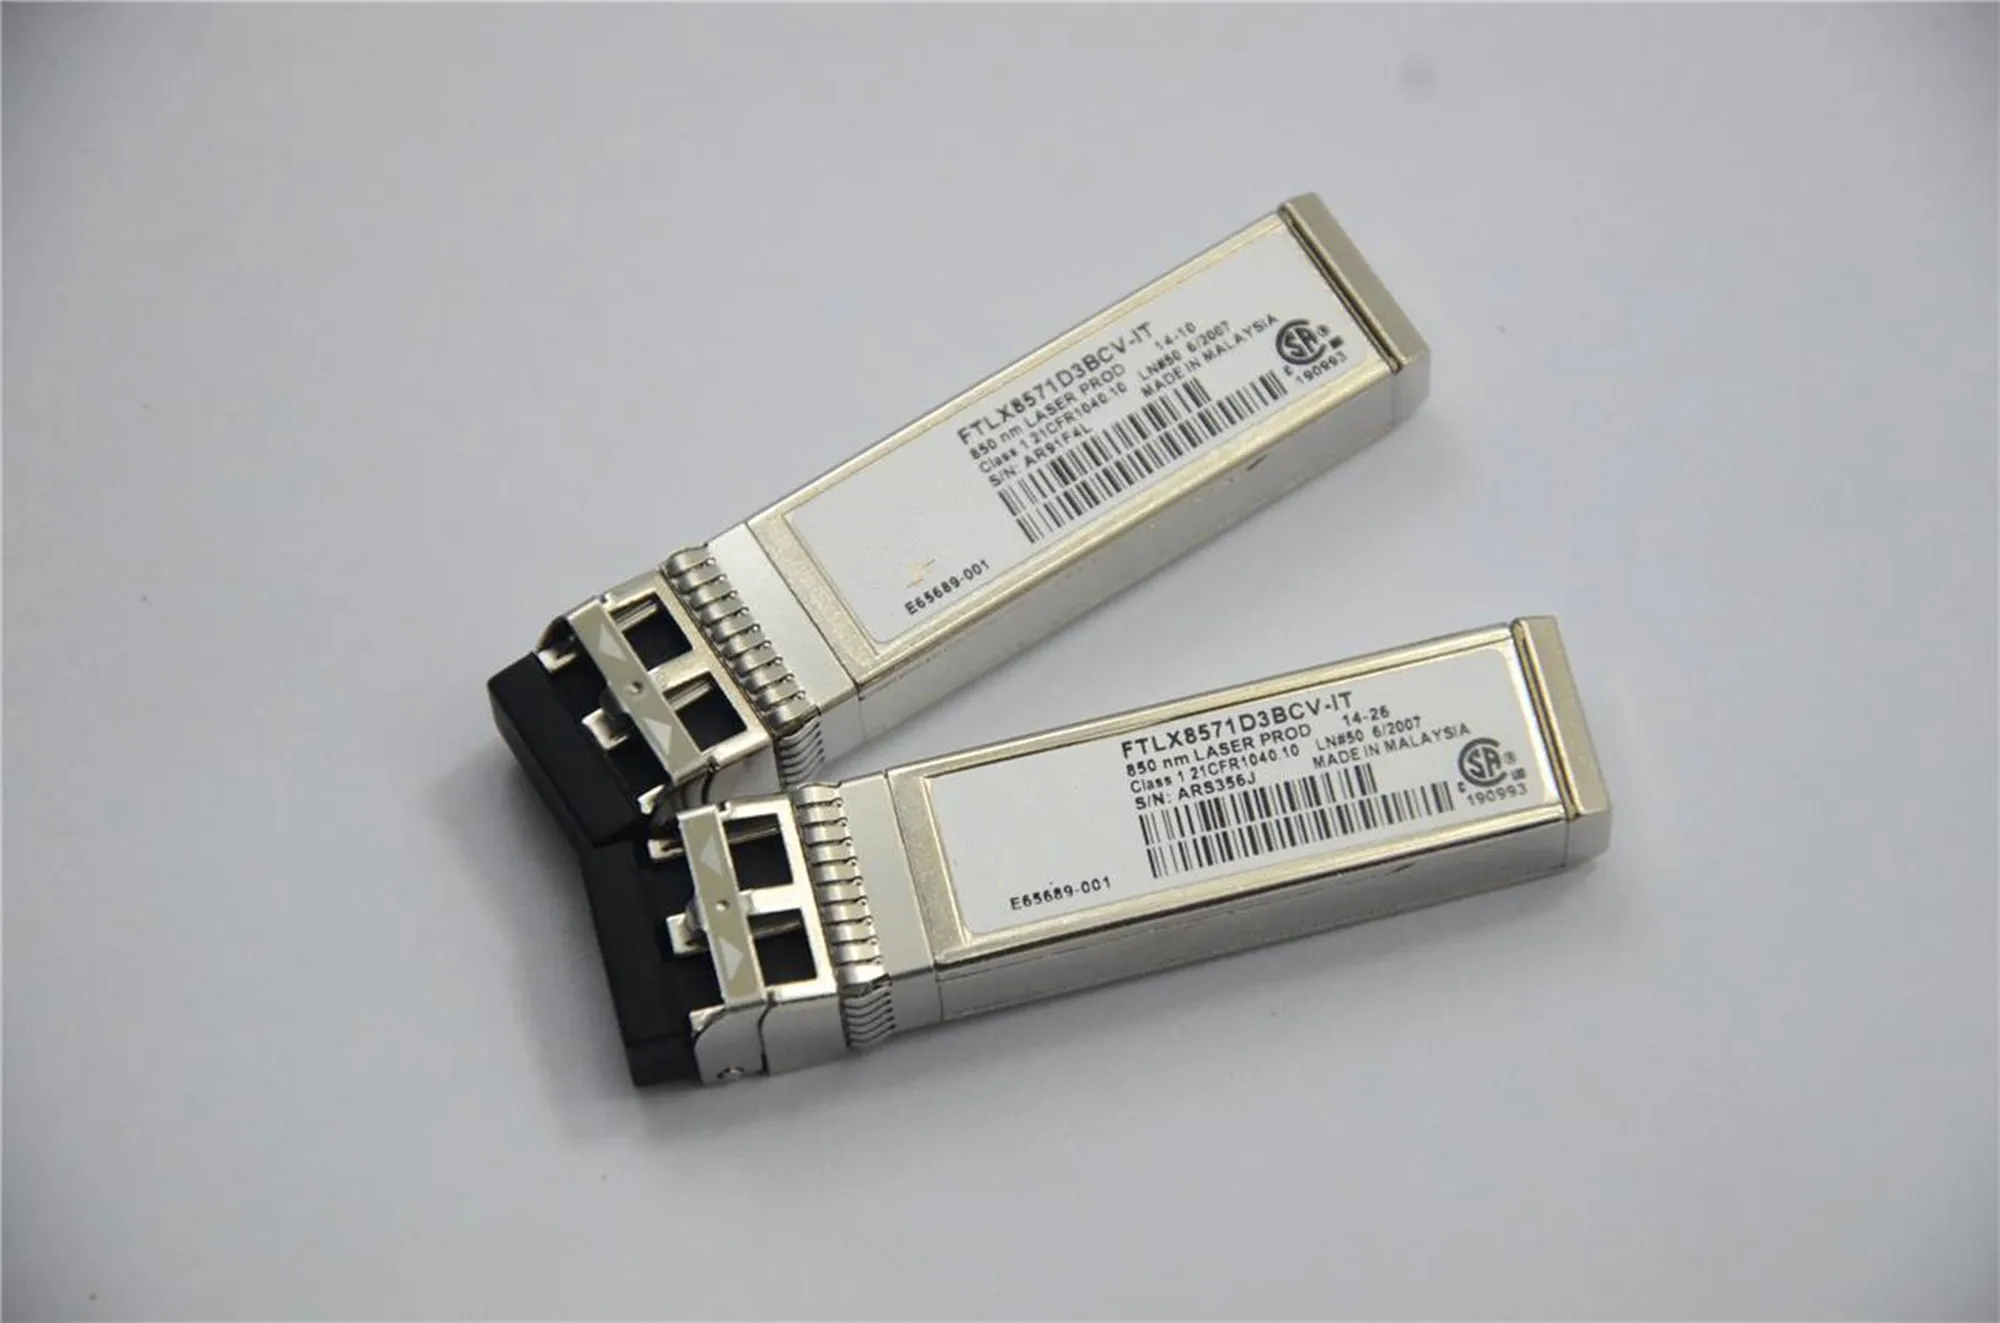 Int-el transceiver 10g sfp/FTLX8571D3BCV-IT/E65689-001/for X710 X520 network adapter switch/sfp 10gb Switch Optical fiber module